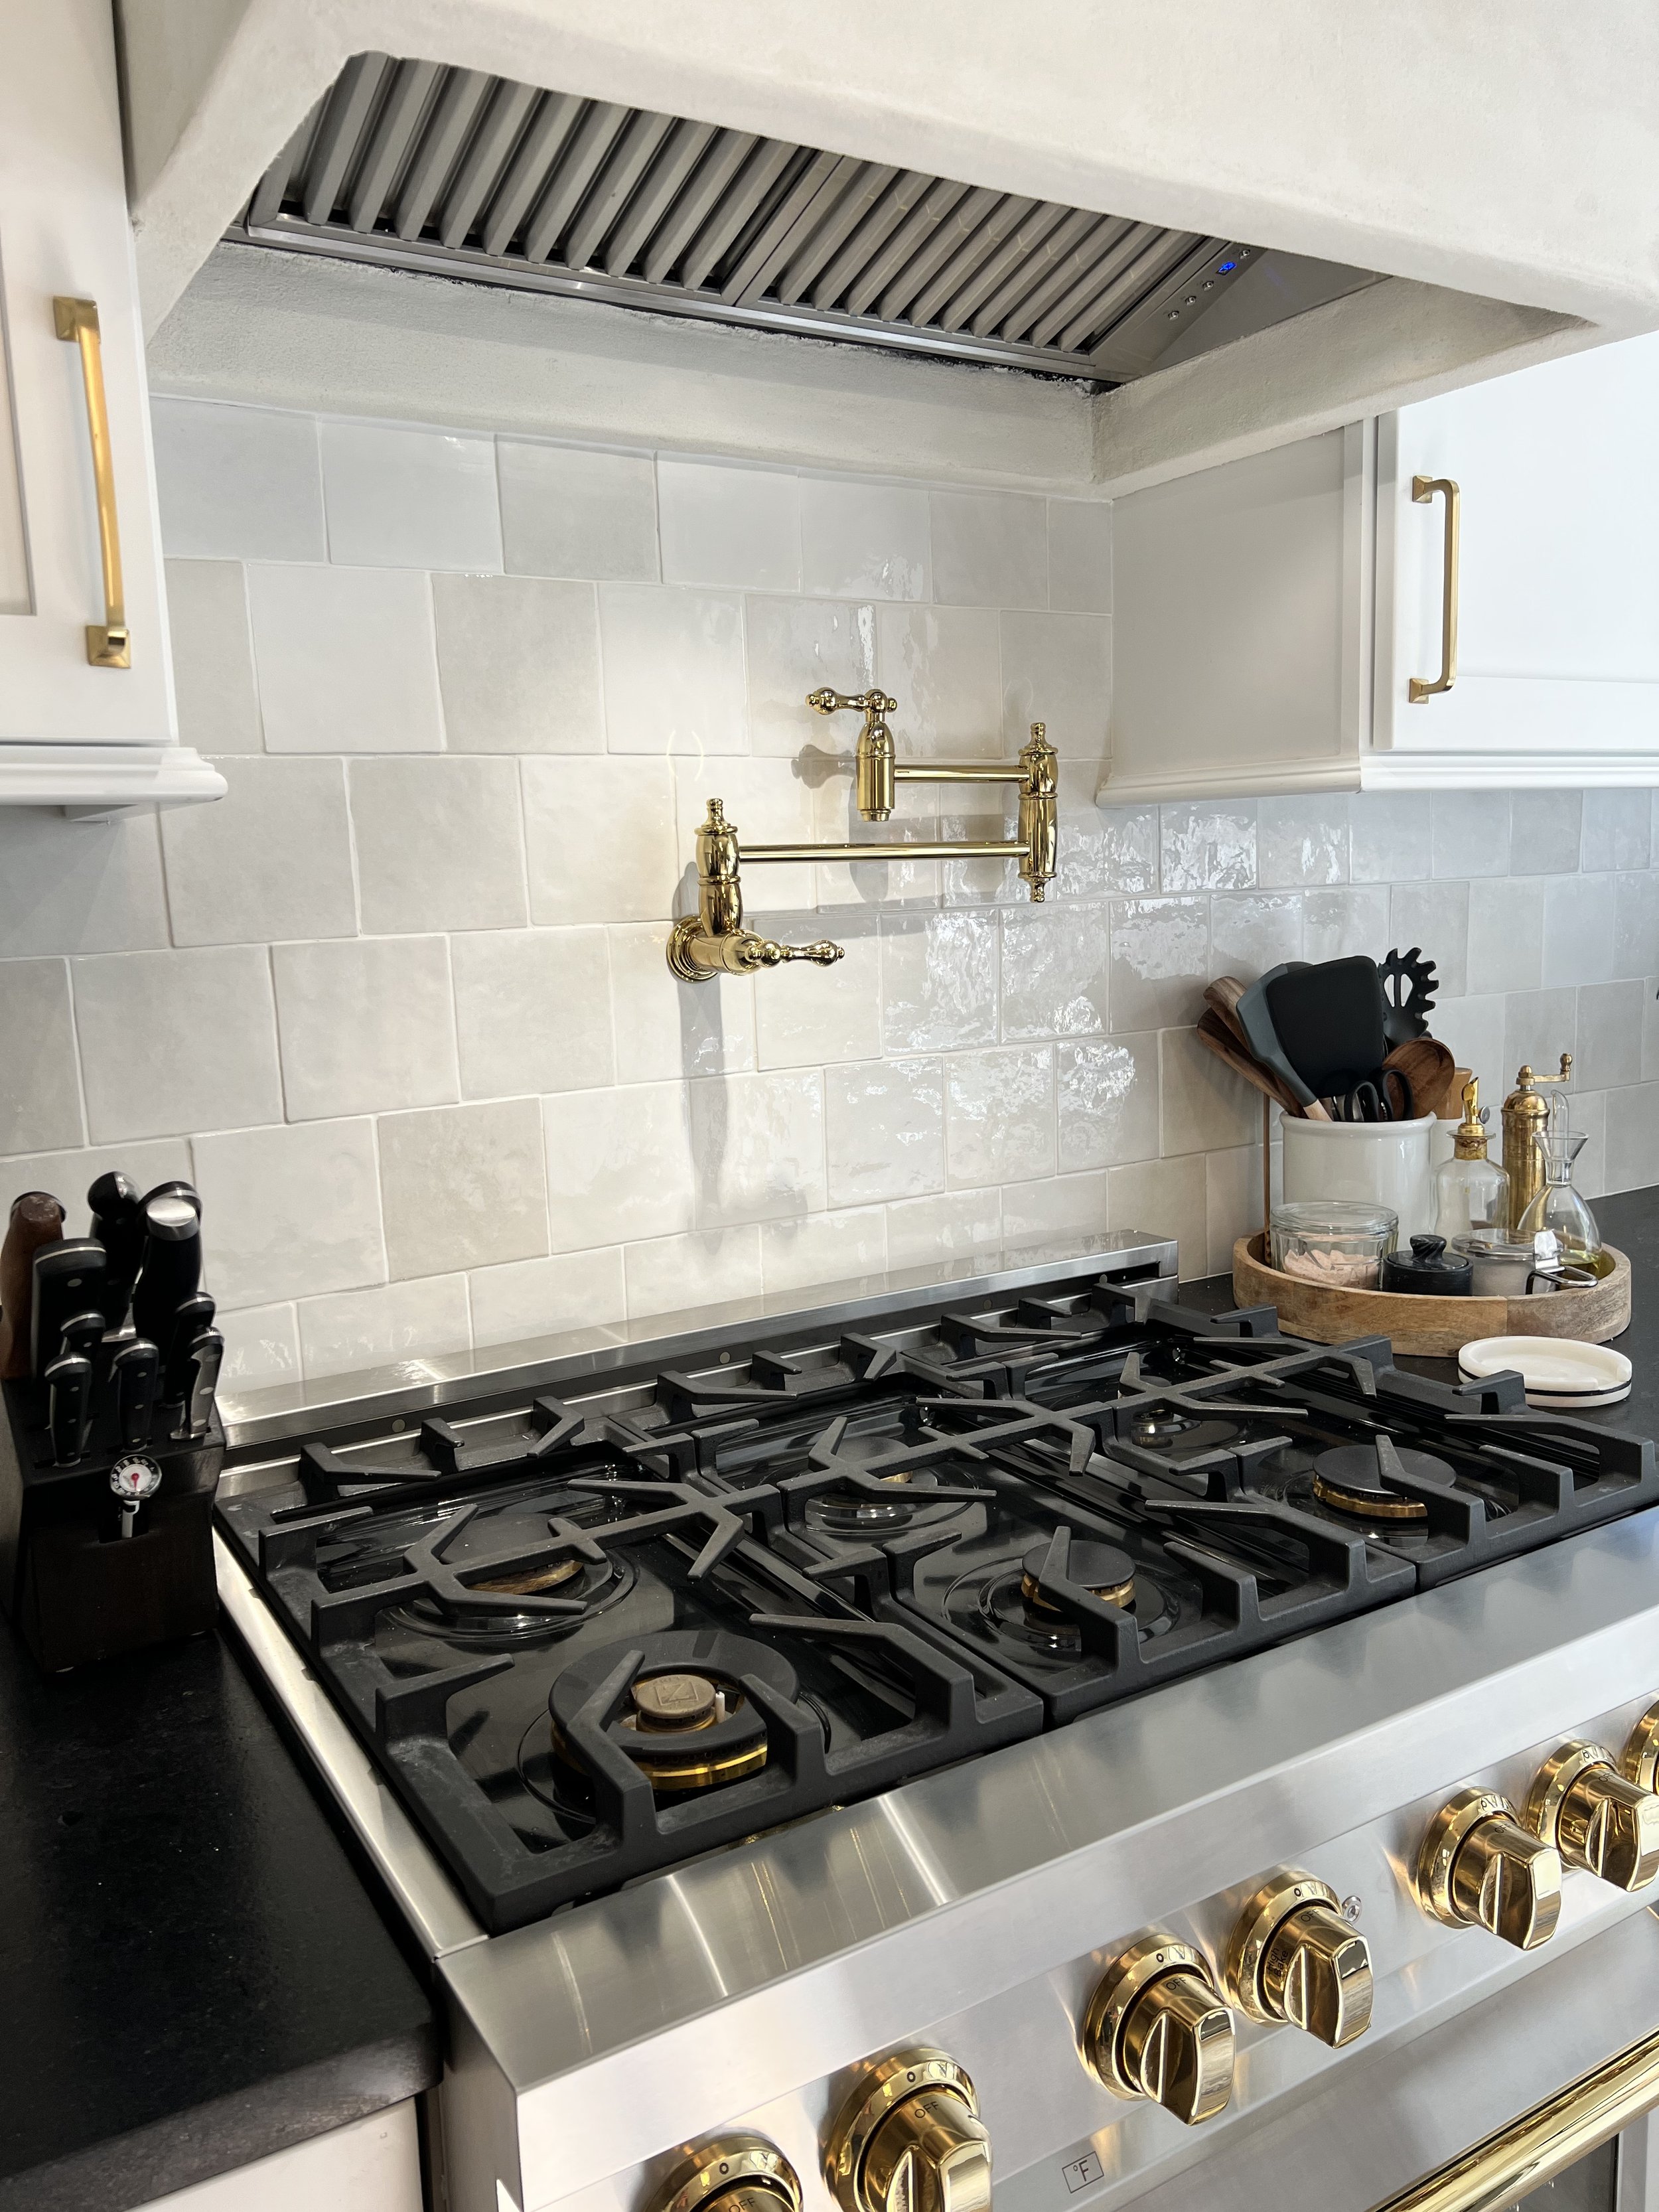 New Kitchen Appliances! — Reveal My DIY